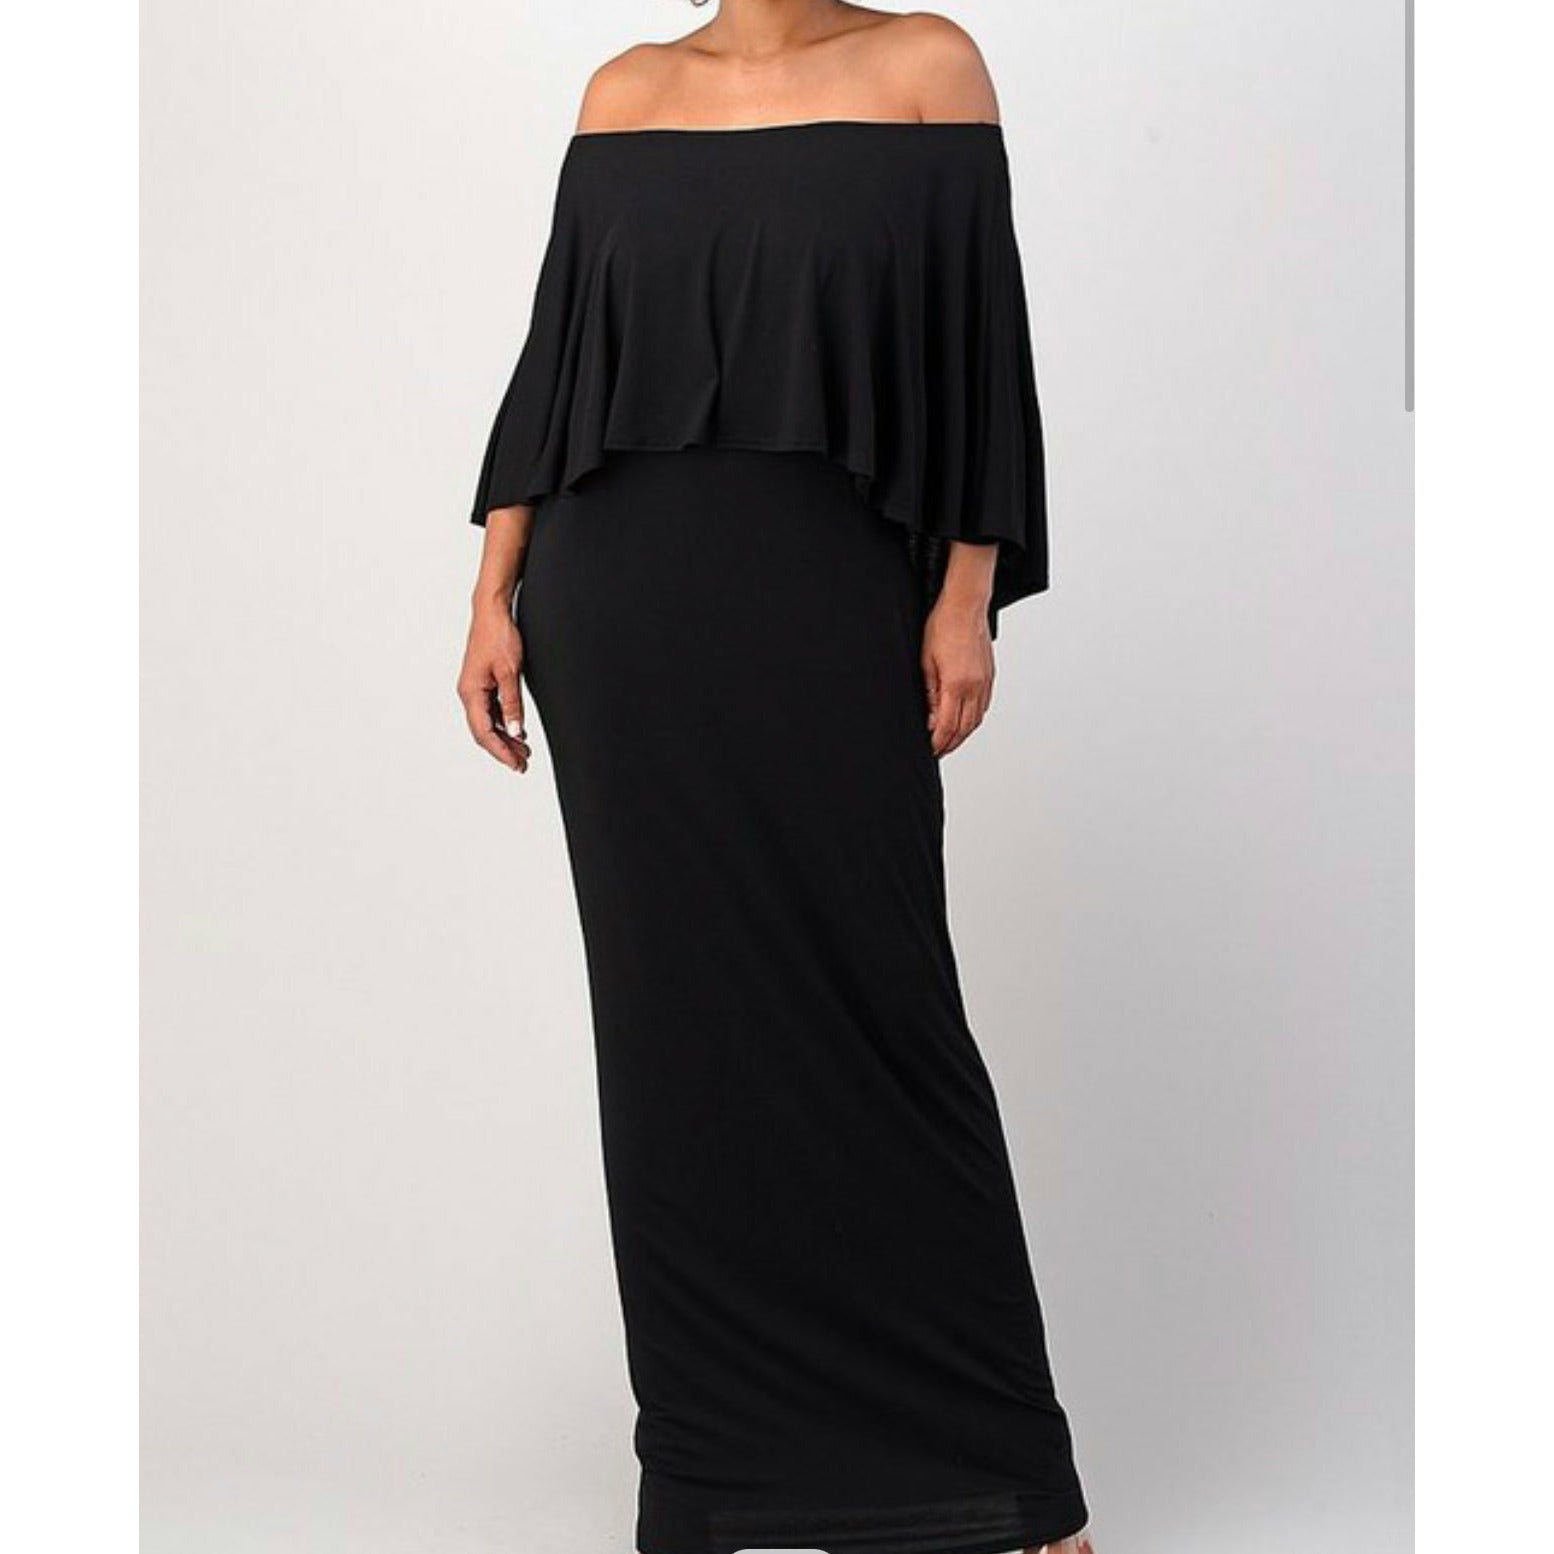 The Dana Black Draped Maxi Dress Size 3X - Fabulously Dressed Boutique 